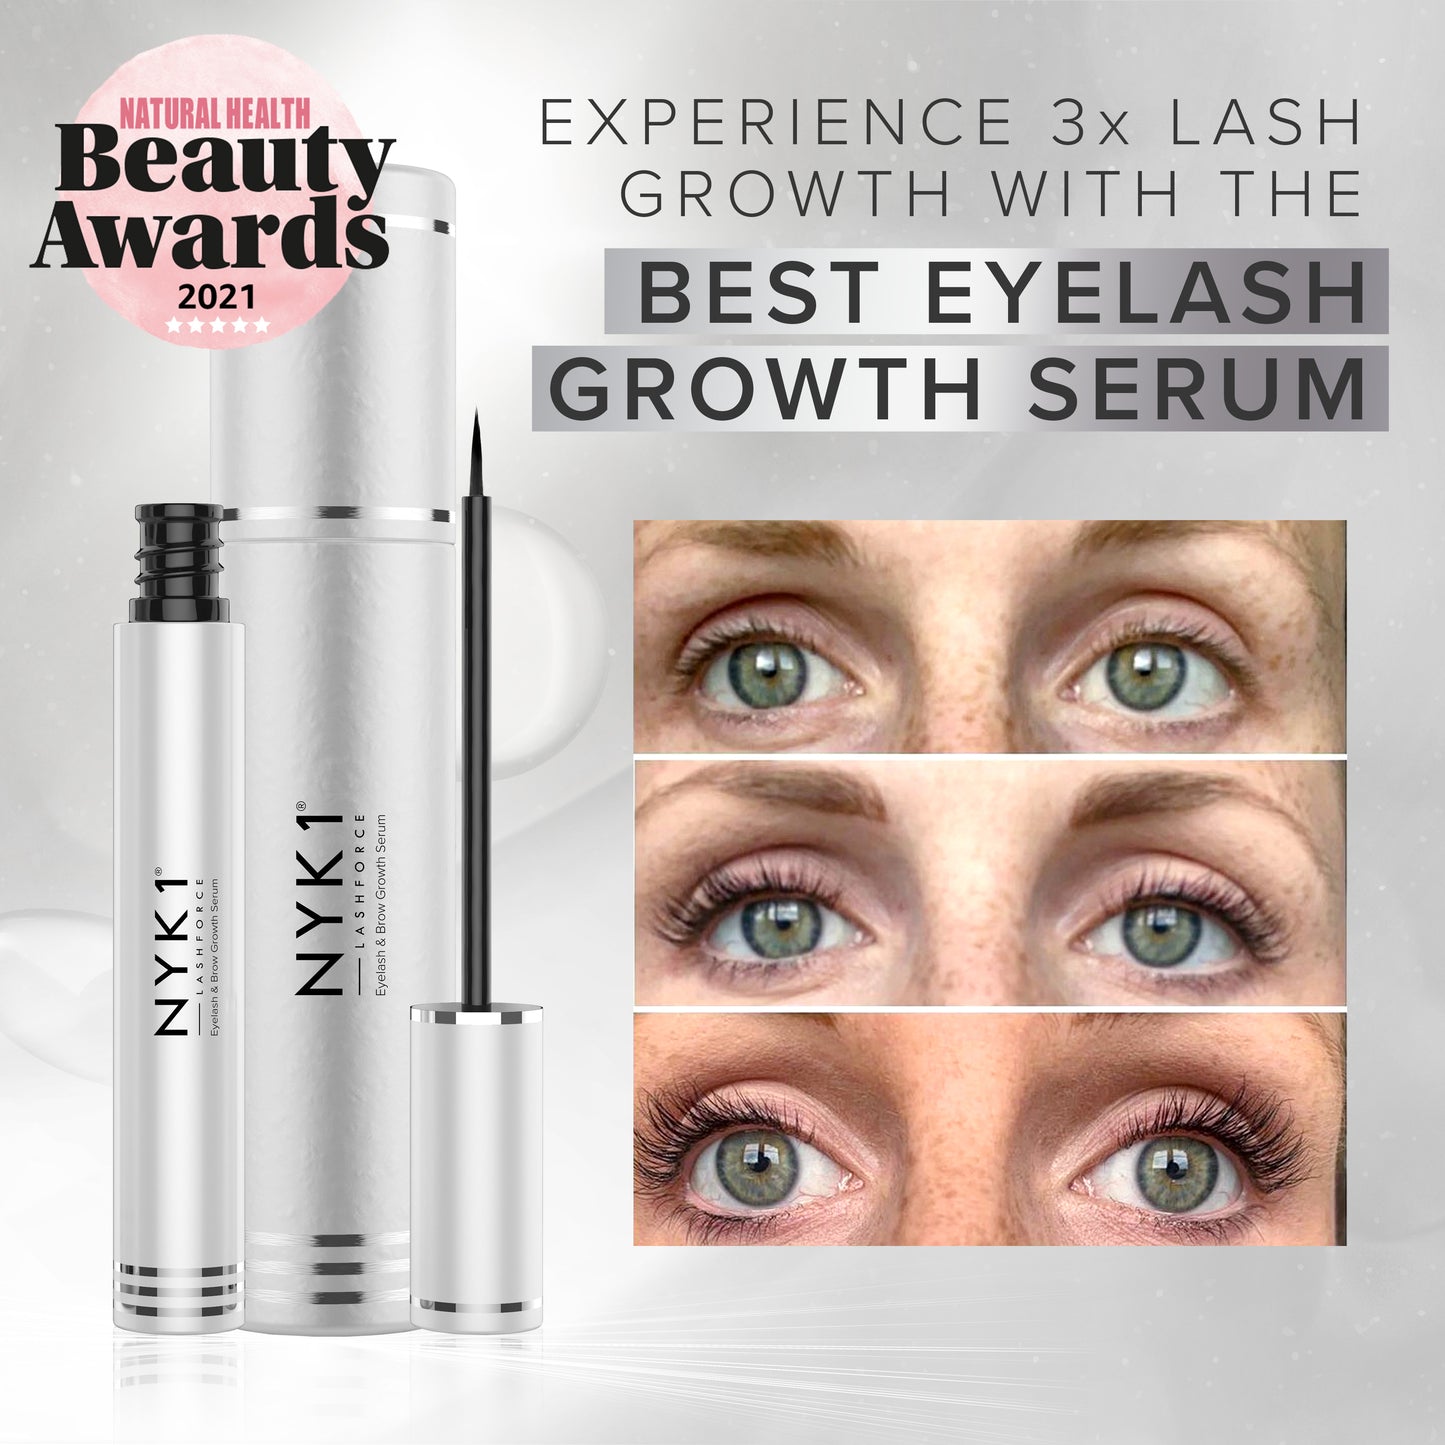 NYK1 LashForce Eyelash Growth Serum for Longer, Thicker & Fuller Lashes. 4-6 month usage